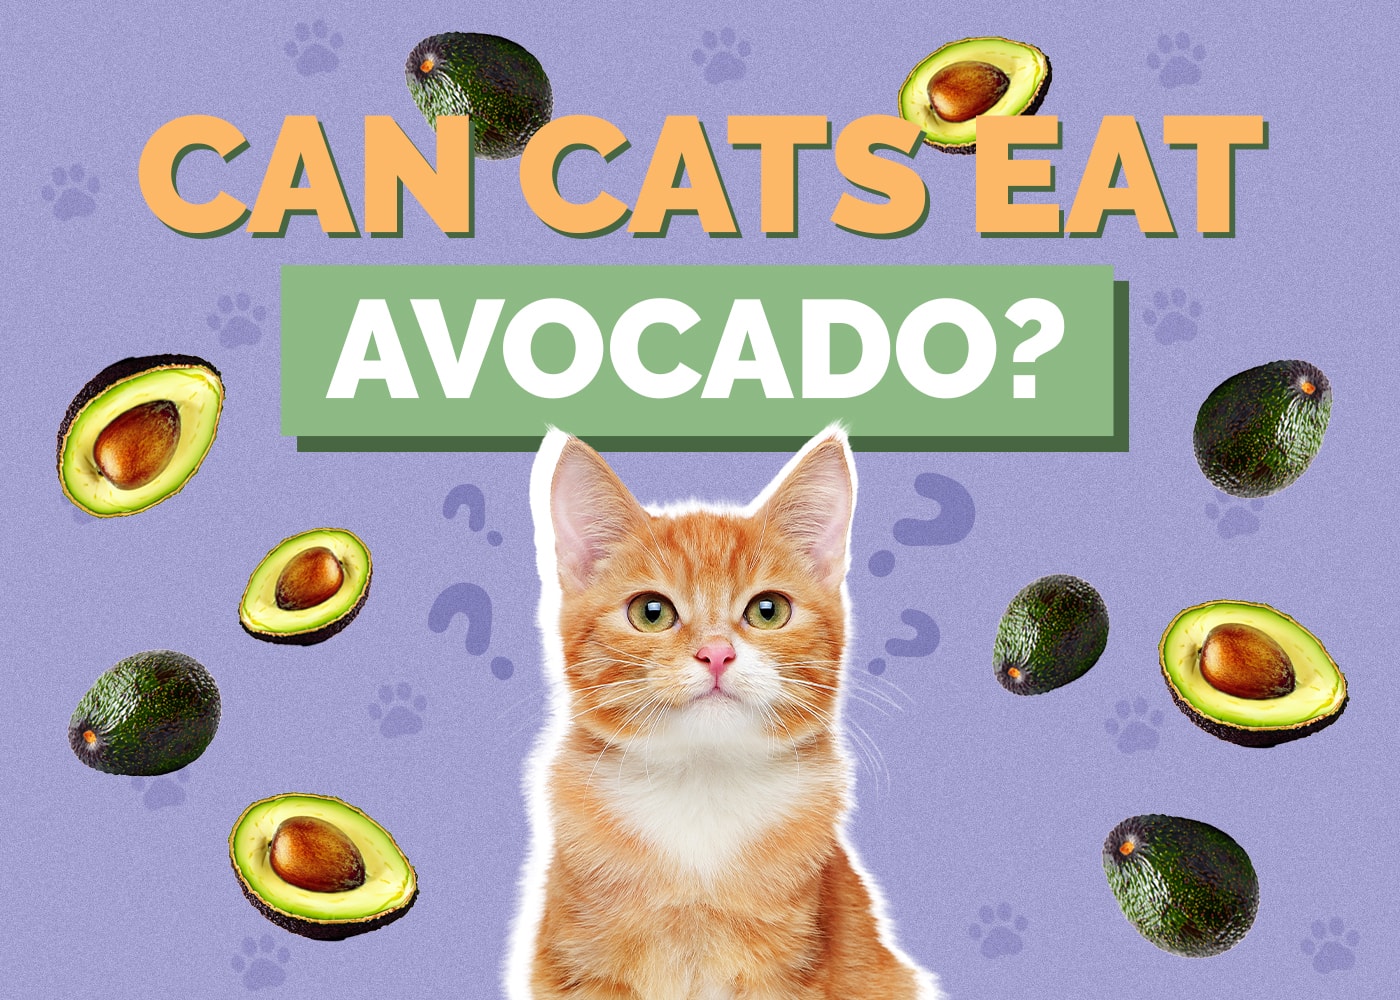 Can Cats Eat avocado